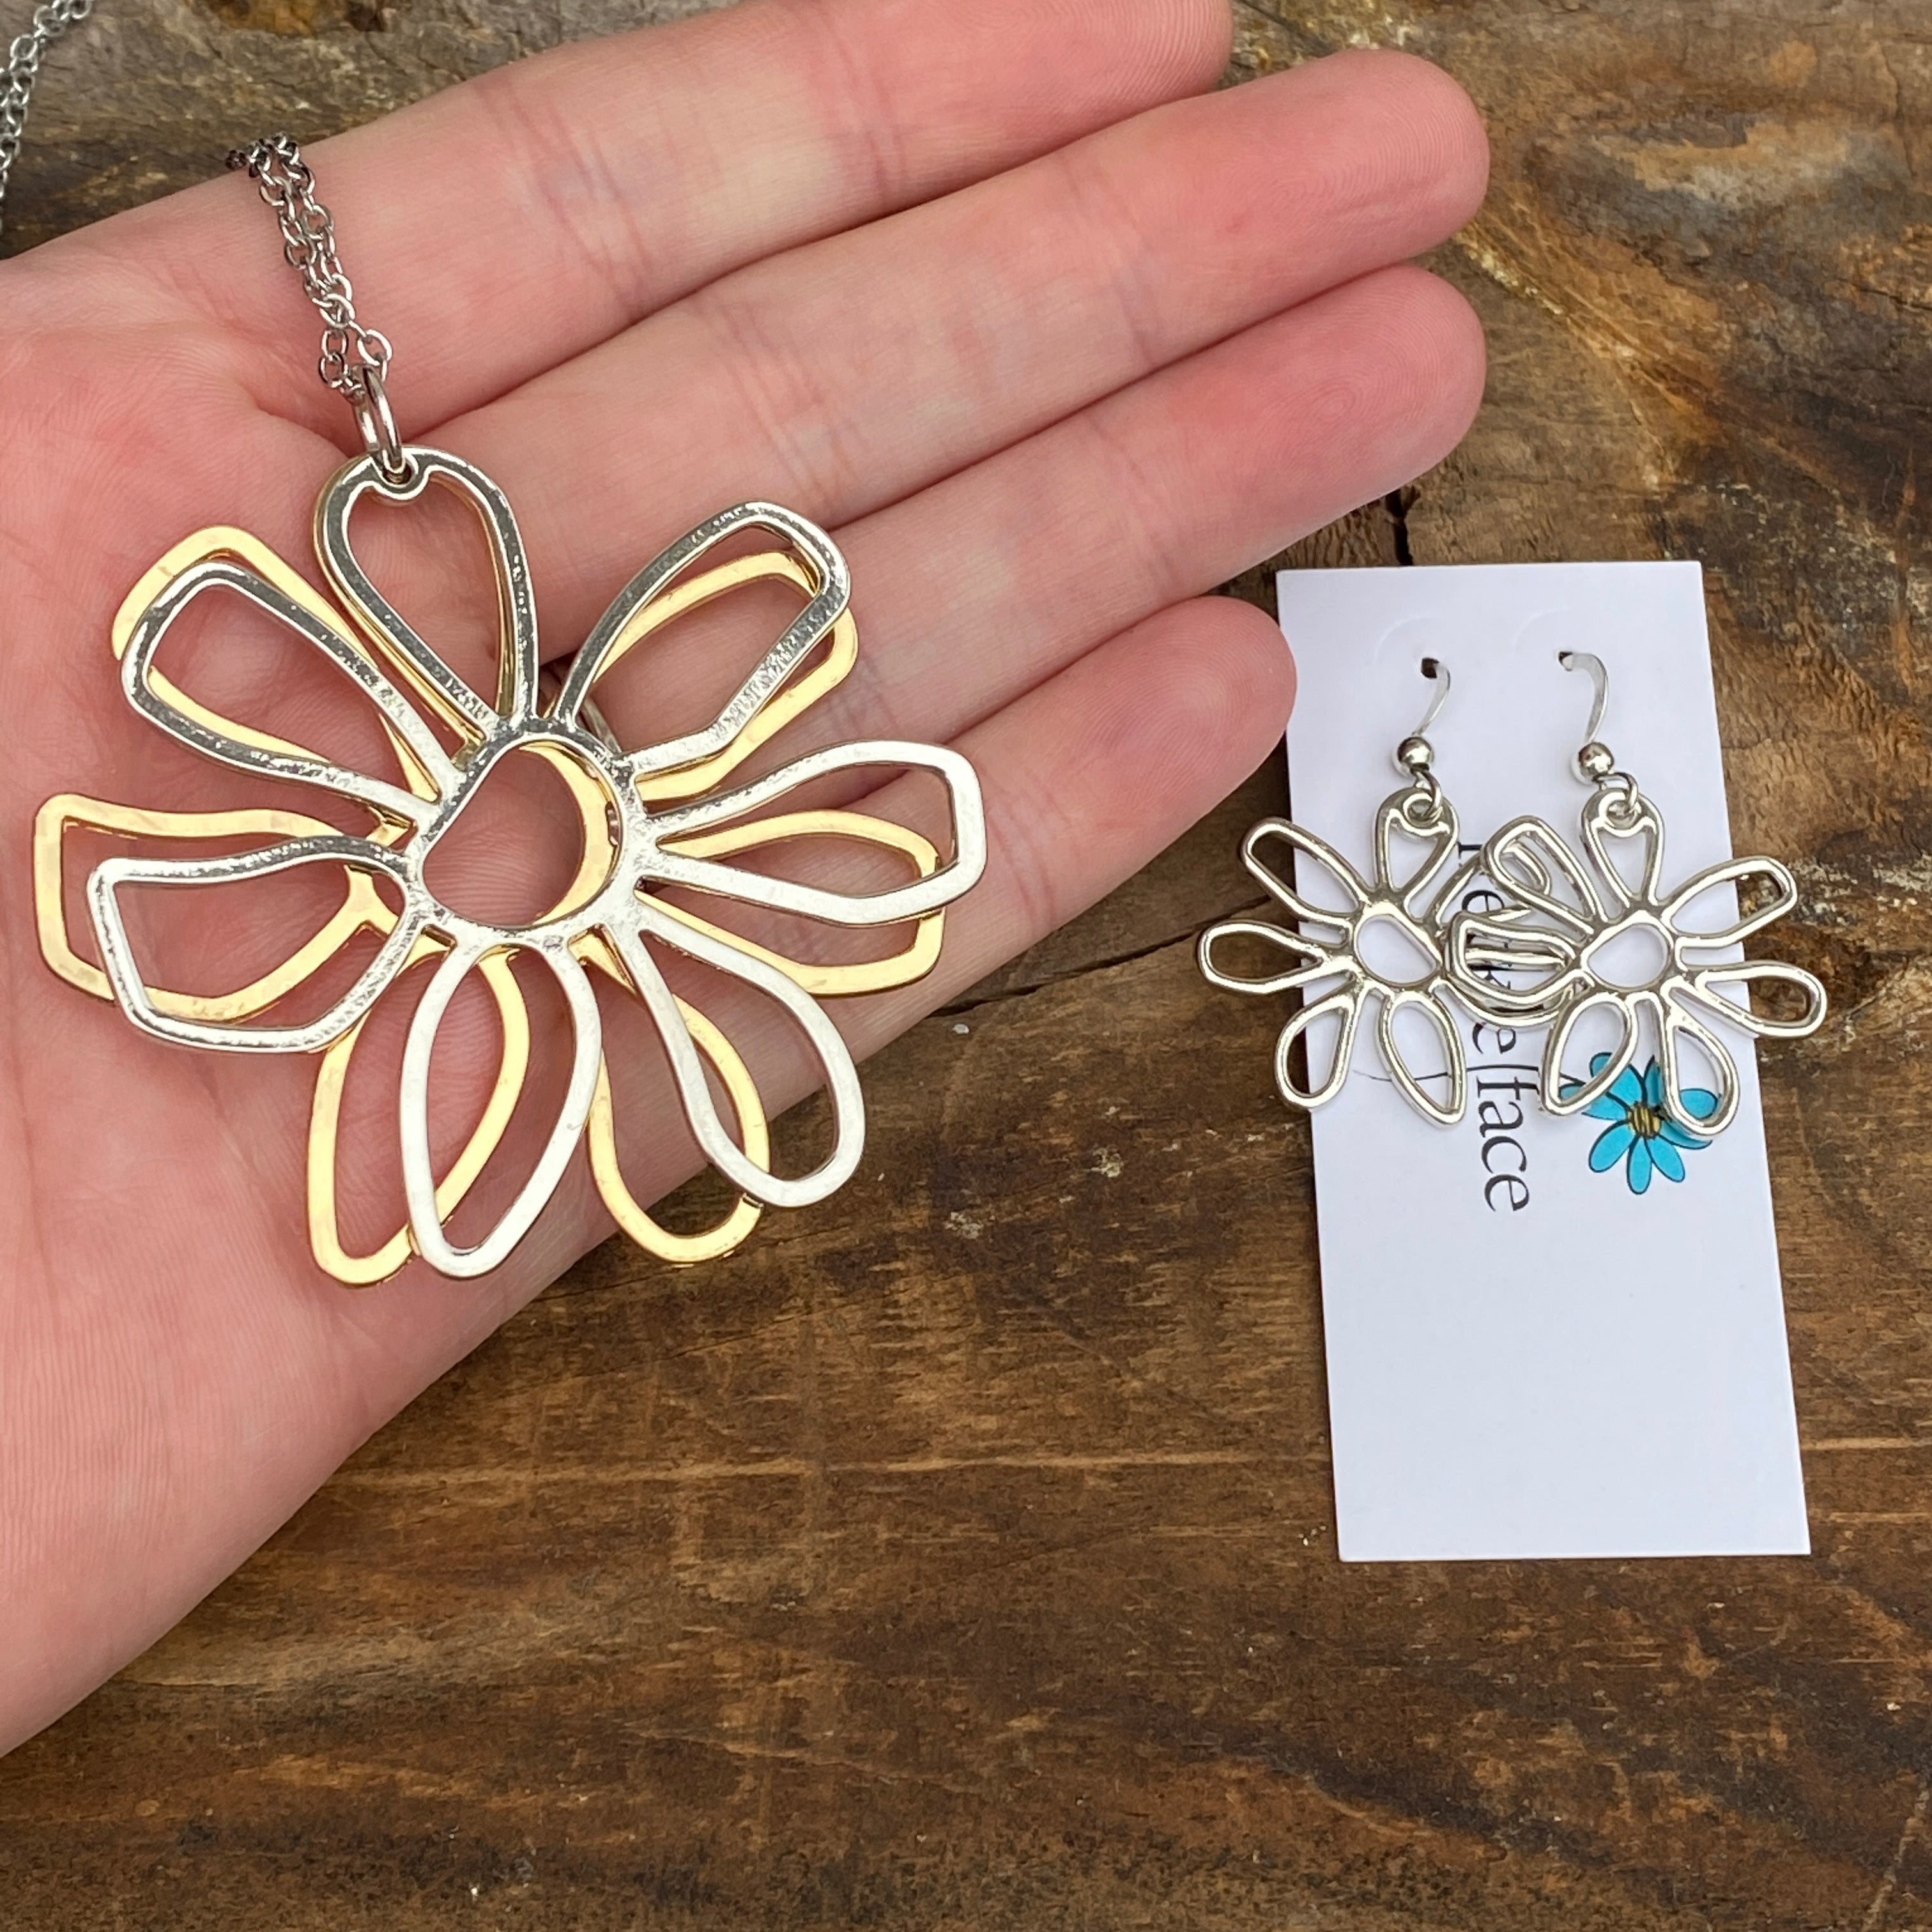 Double Flower Necklace & Earring Set